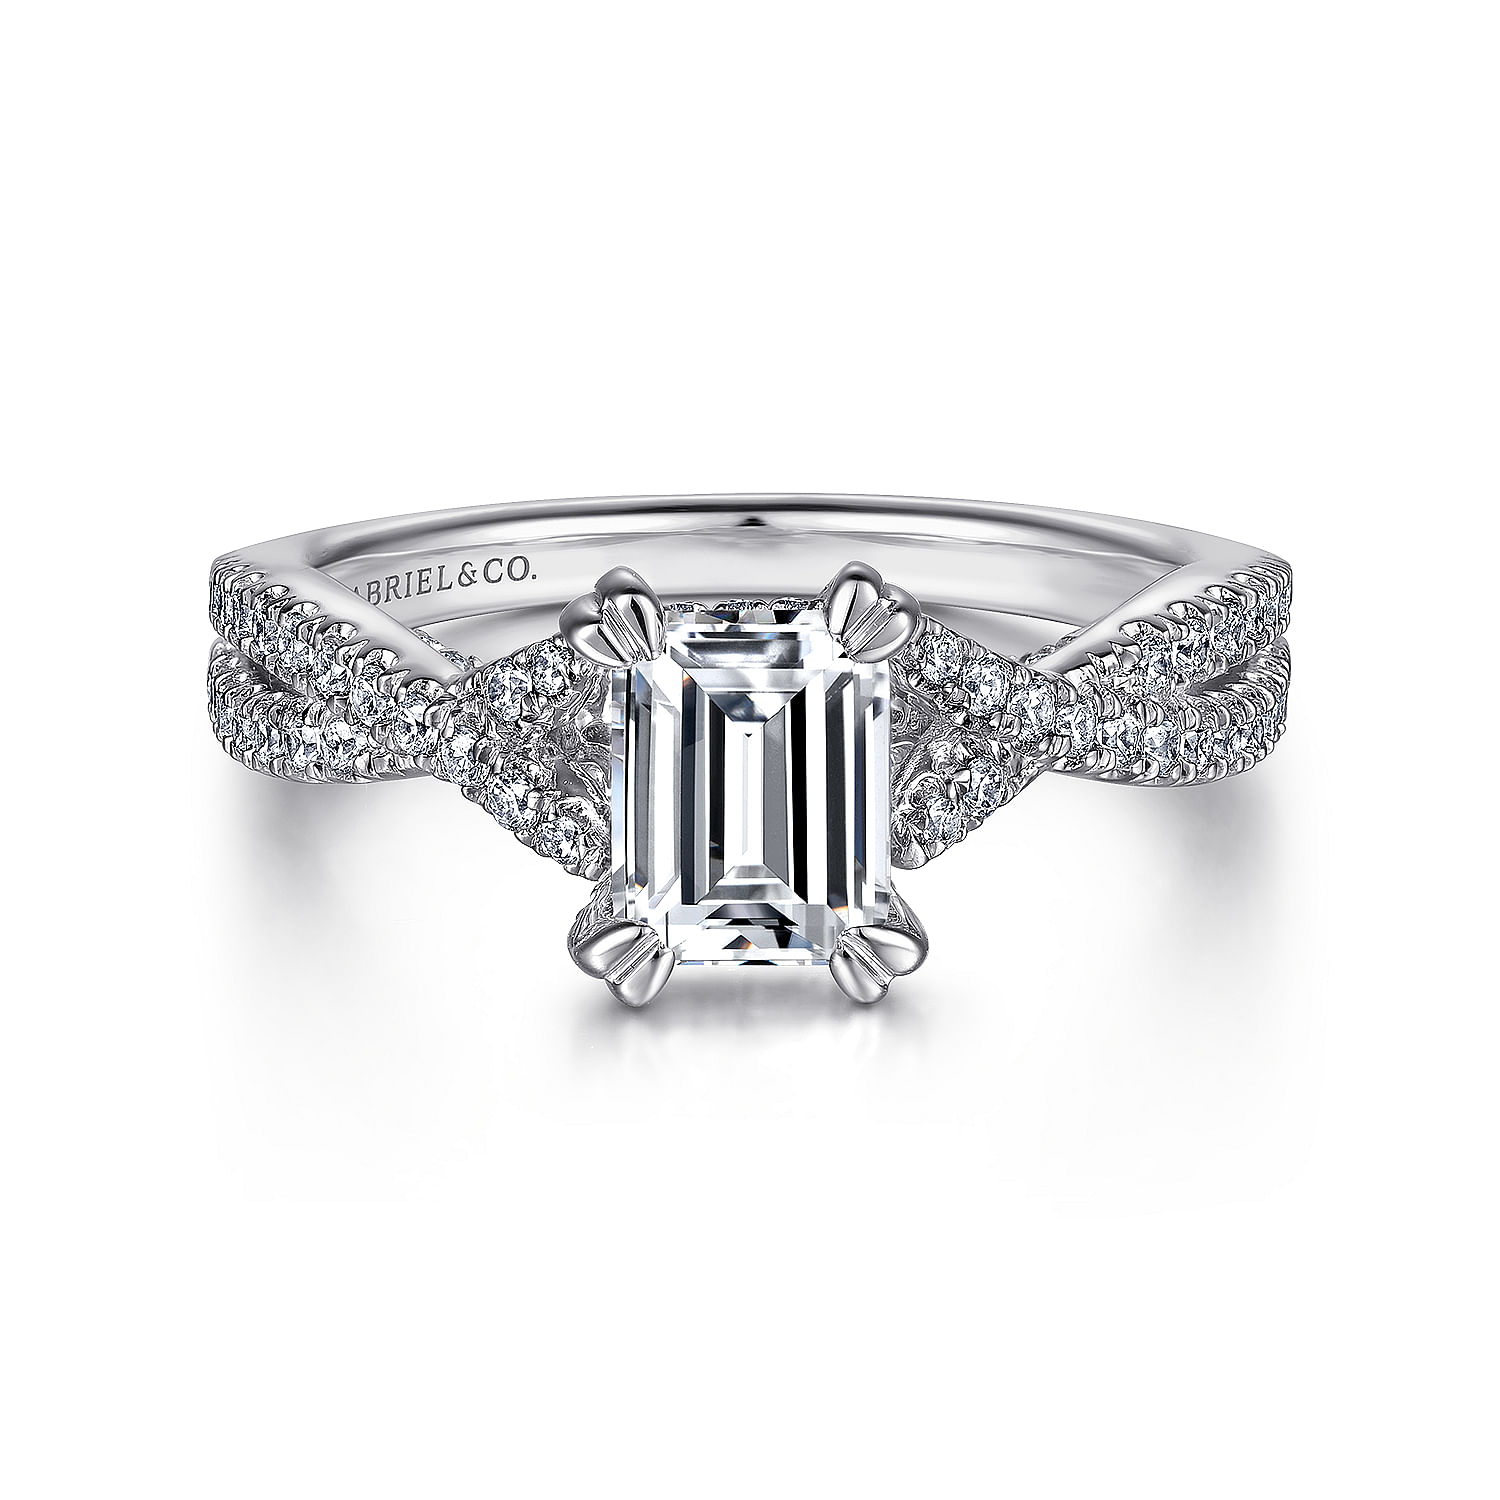 Gabriel - 14K White Gold Twisted Emerald Cut Diamond Engagement Ring